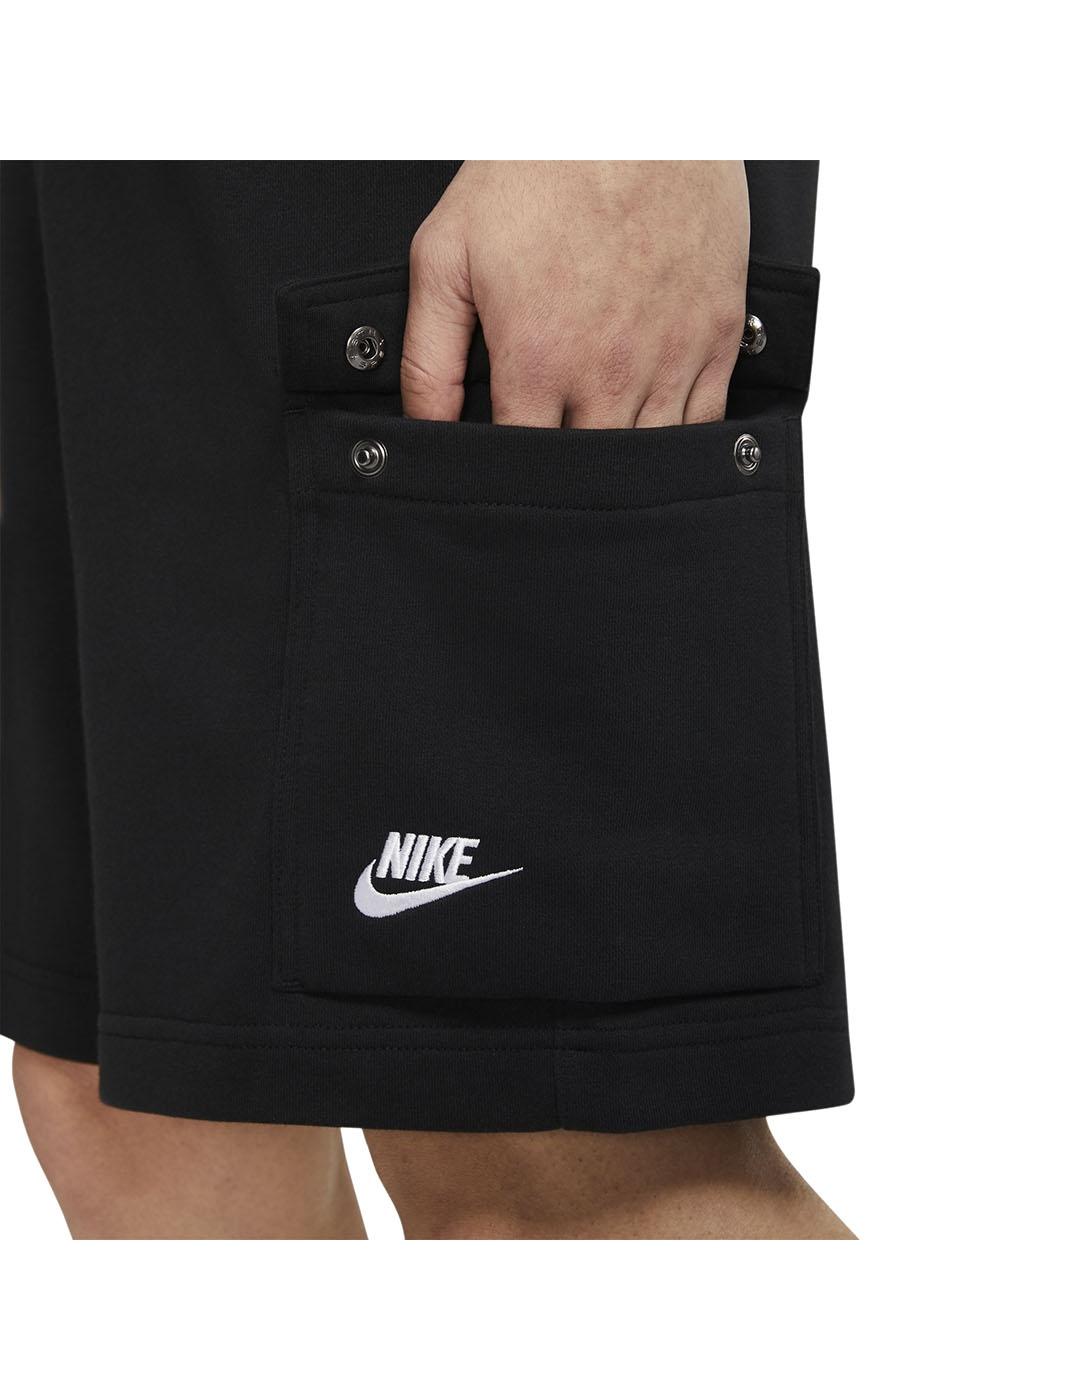 Pantalon Corto Hombre Nike Cargo Negro